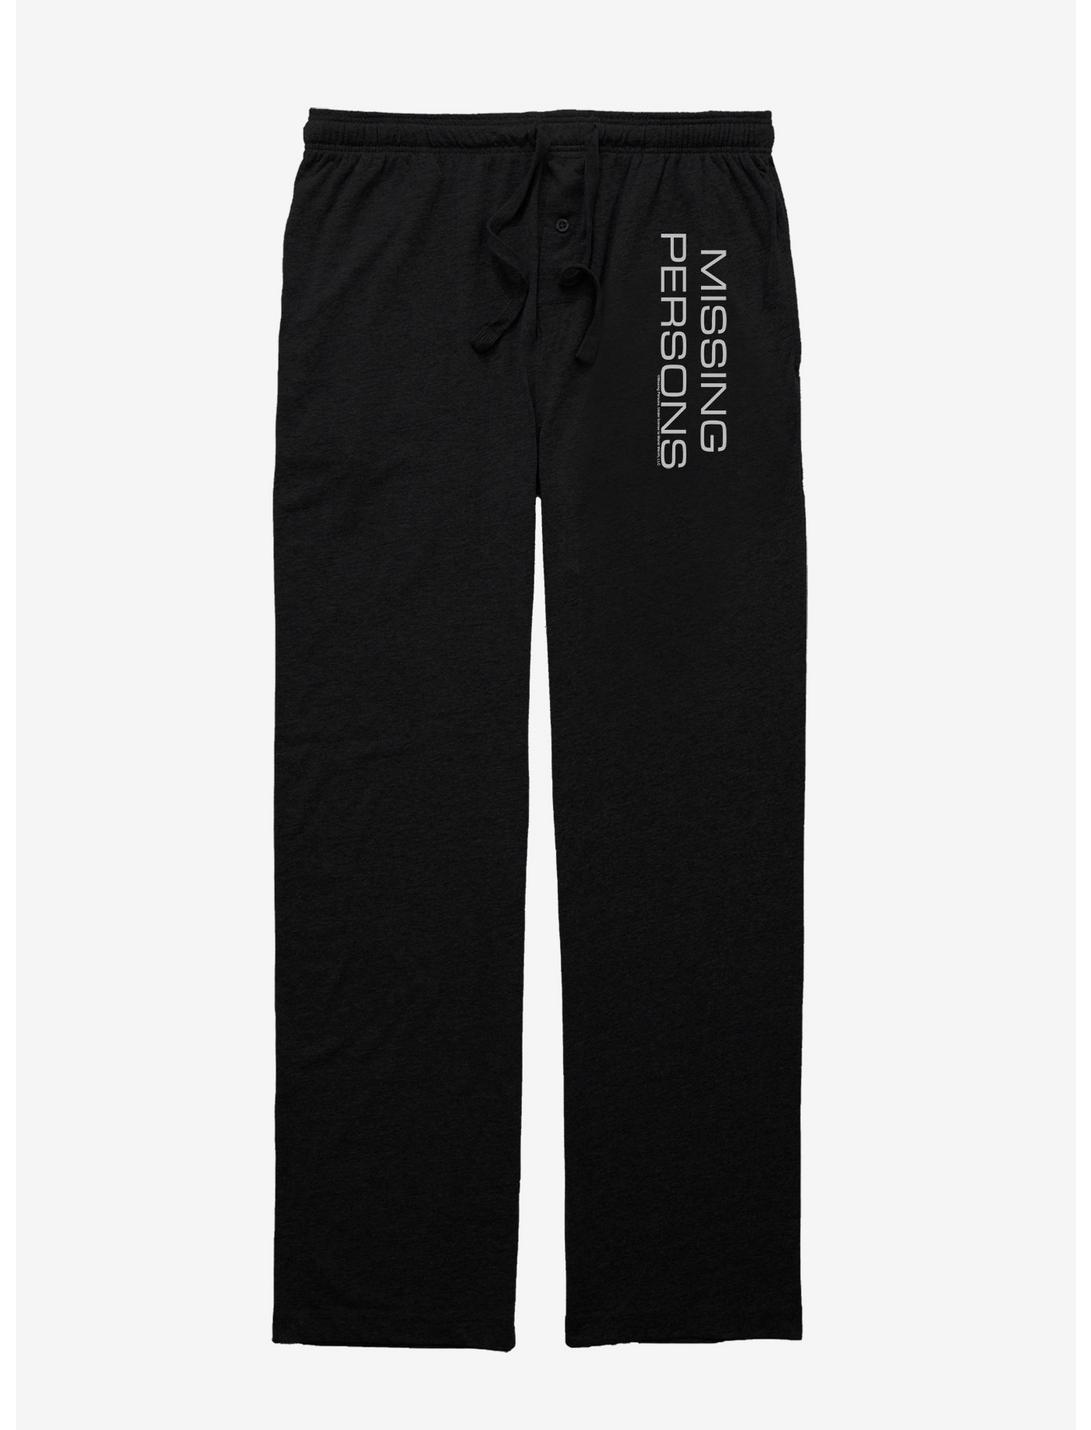 Missing Persons Band Logo Pajama Pants, BLACK, hi-res